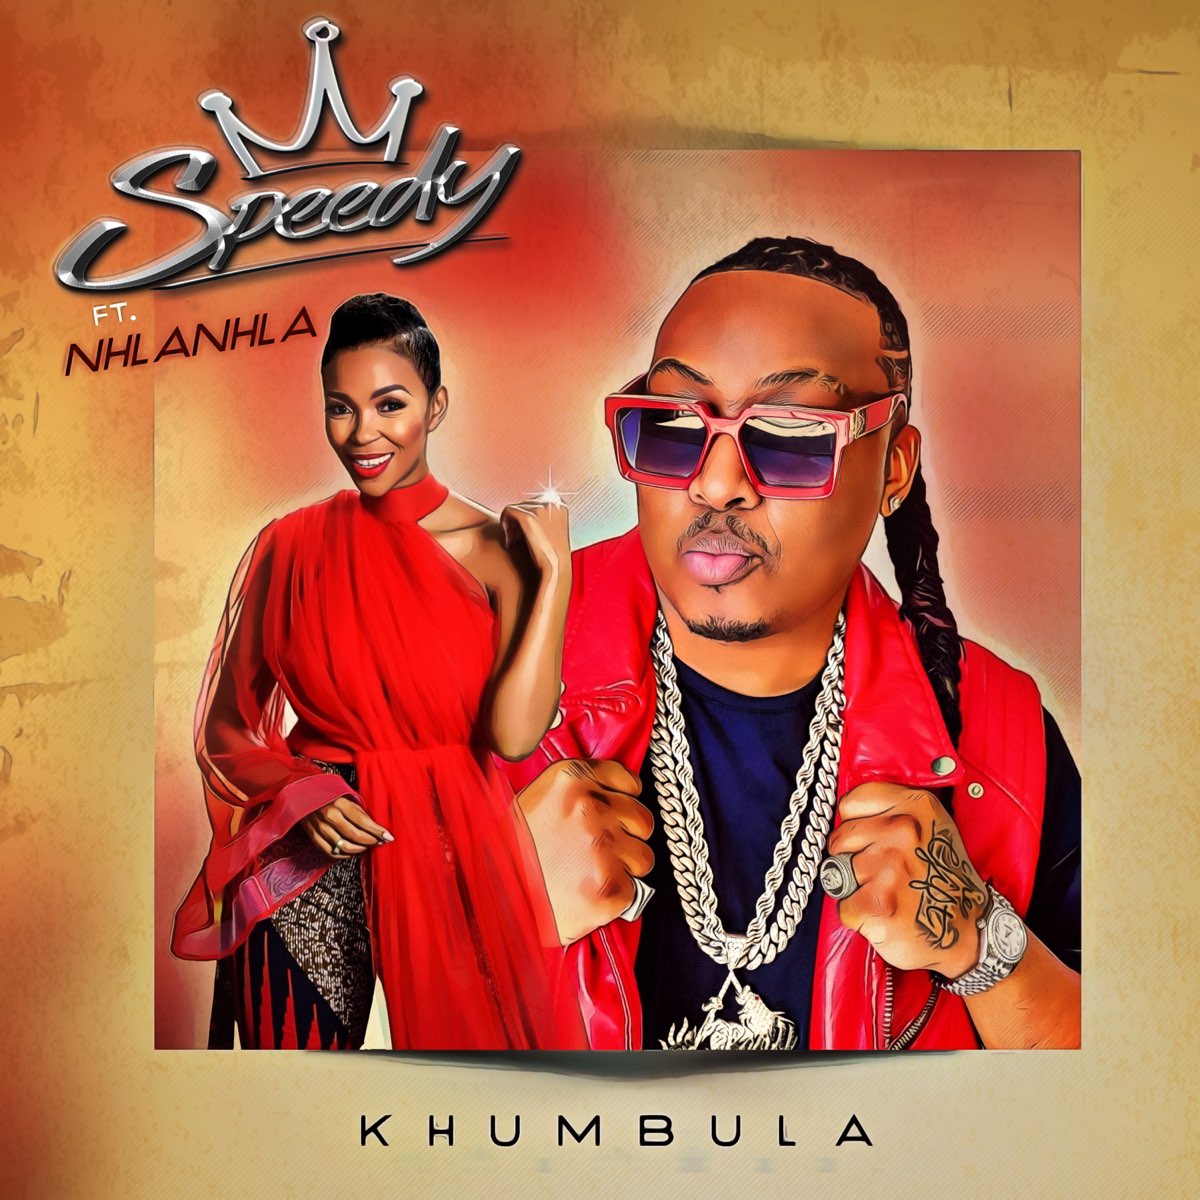 Singing speed. Nhlanhla Nciza. Speedy песня. "Speedy Songs" && ( исполнитель | группа | музыка | Music | Band | artist ) && (фото | photo). Speedy feat Lundie.